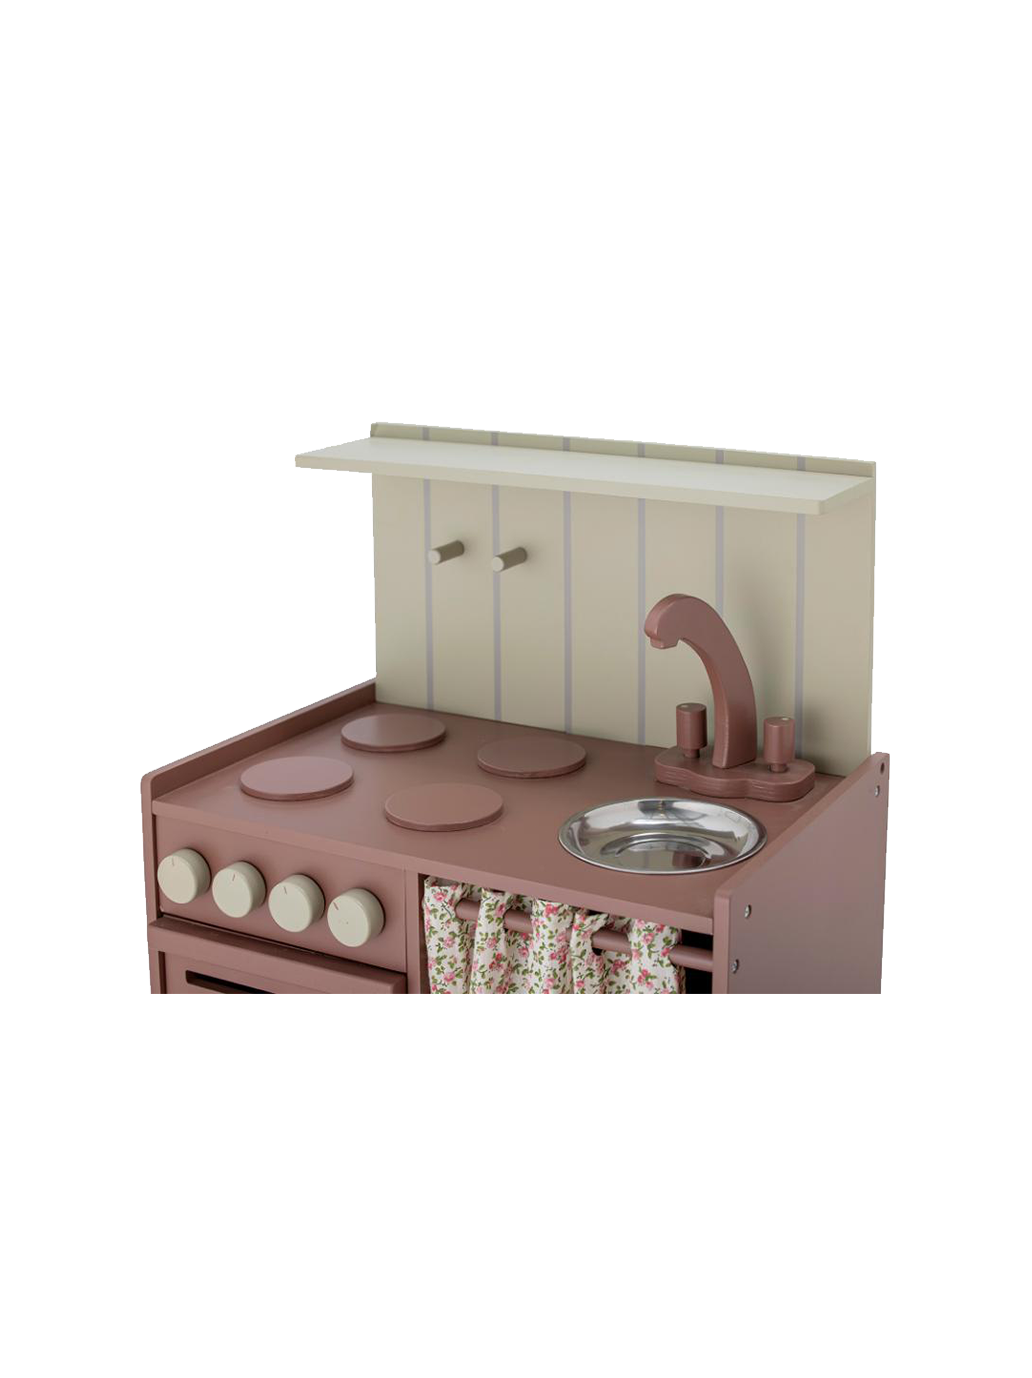 Mini wooden stove